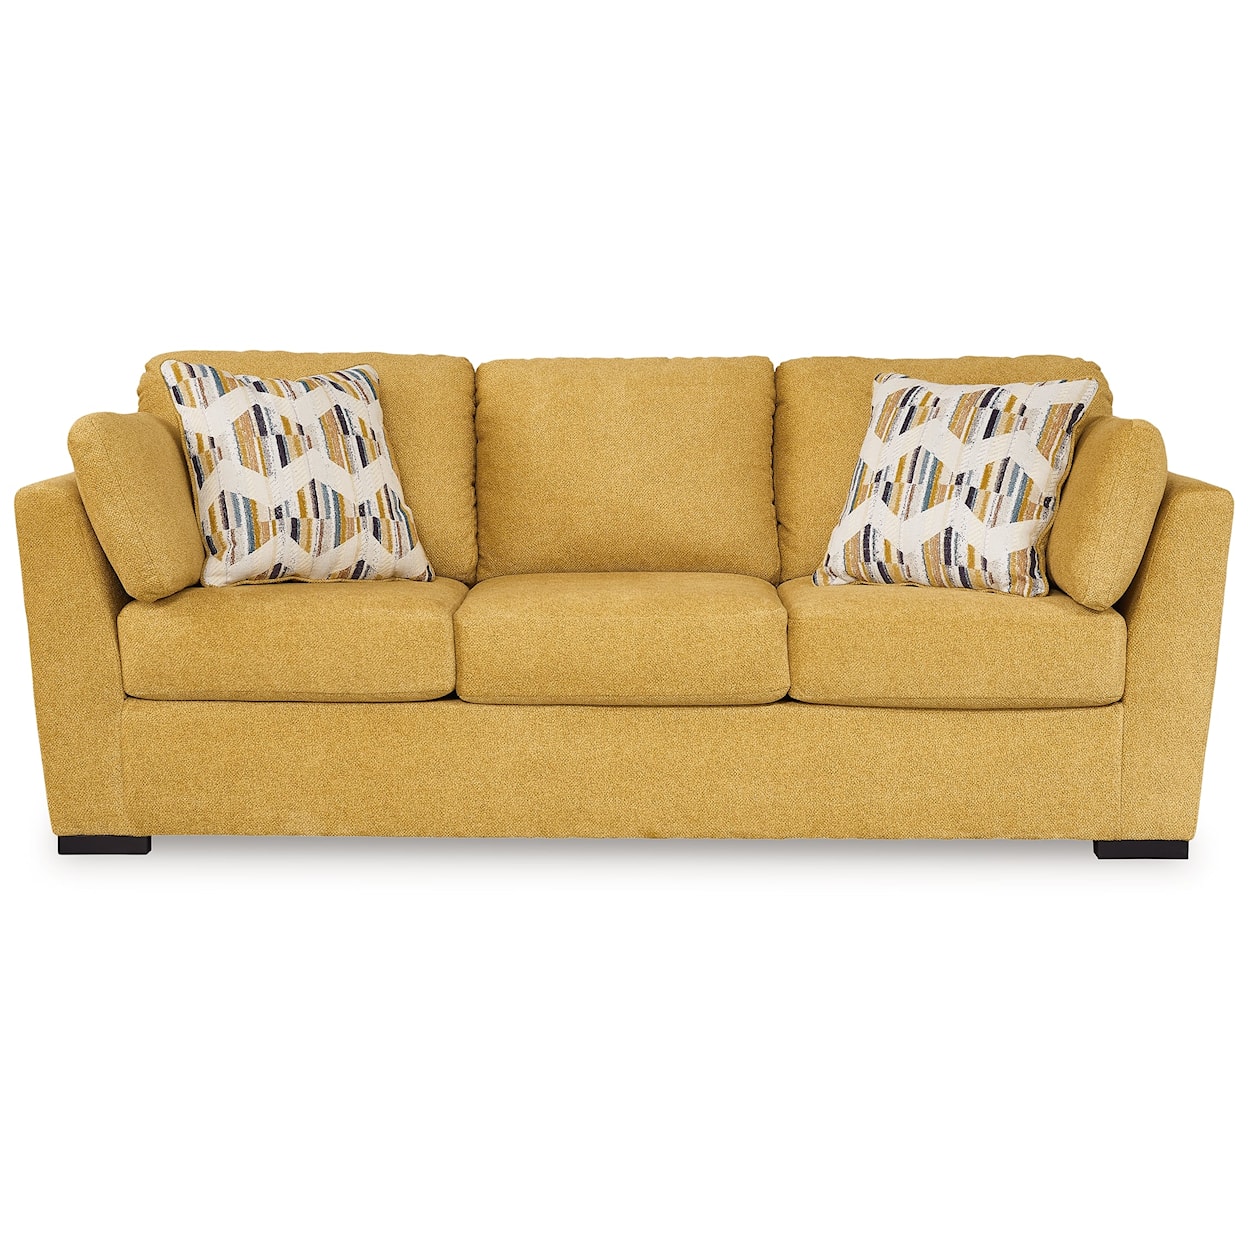 Ashley Furniture Signature Design Keerwick Queen Sofa Sleeper